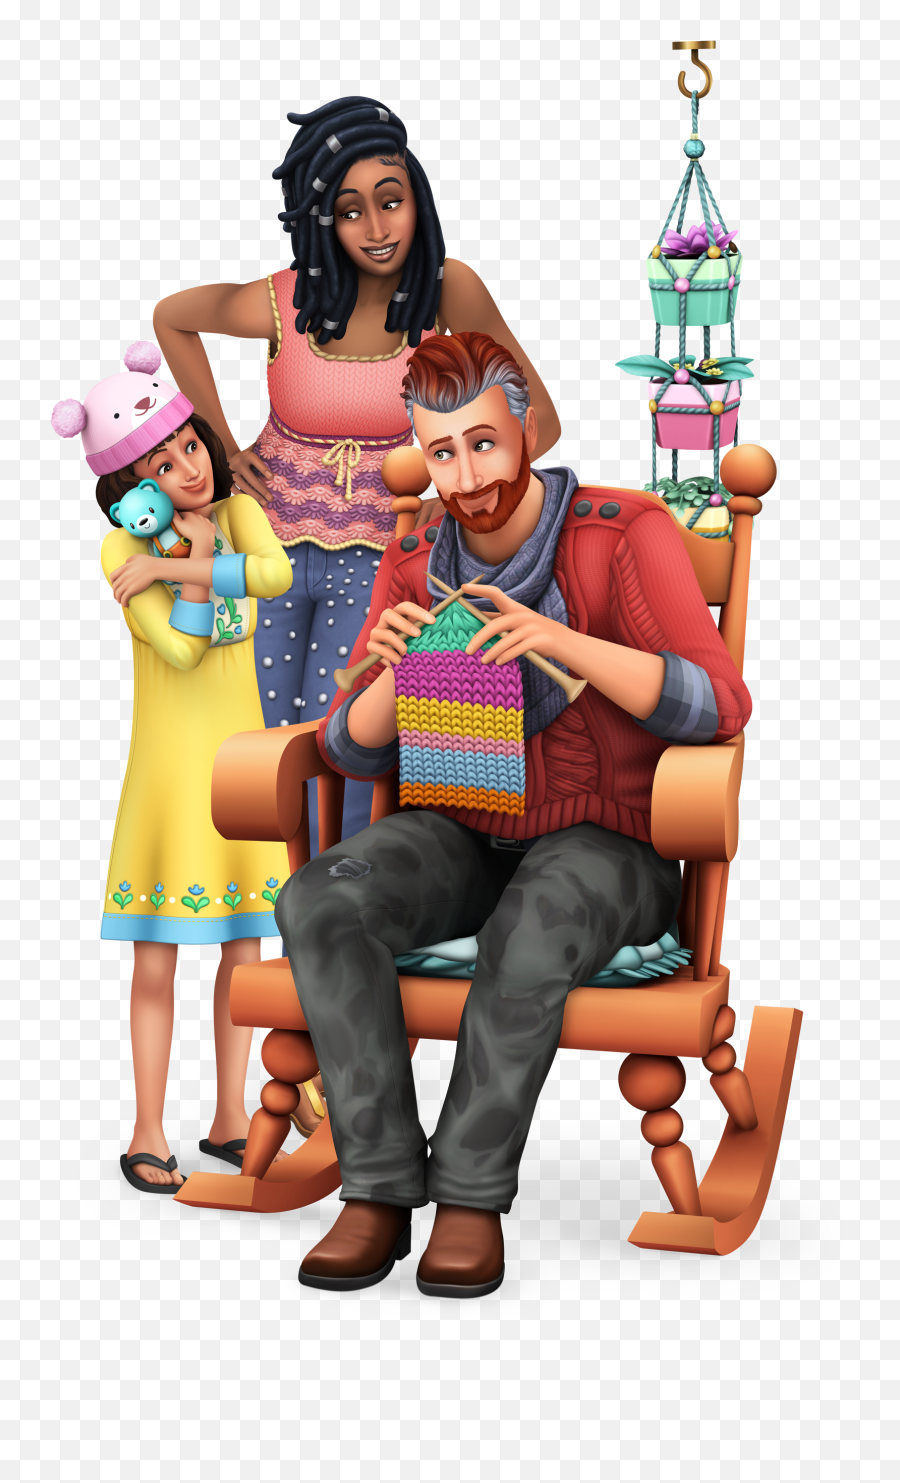 The Sims 4 Nifty Knitting Official Logo Box Art Icon And - Sims 4 Png,Sims 4 Llama Icon